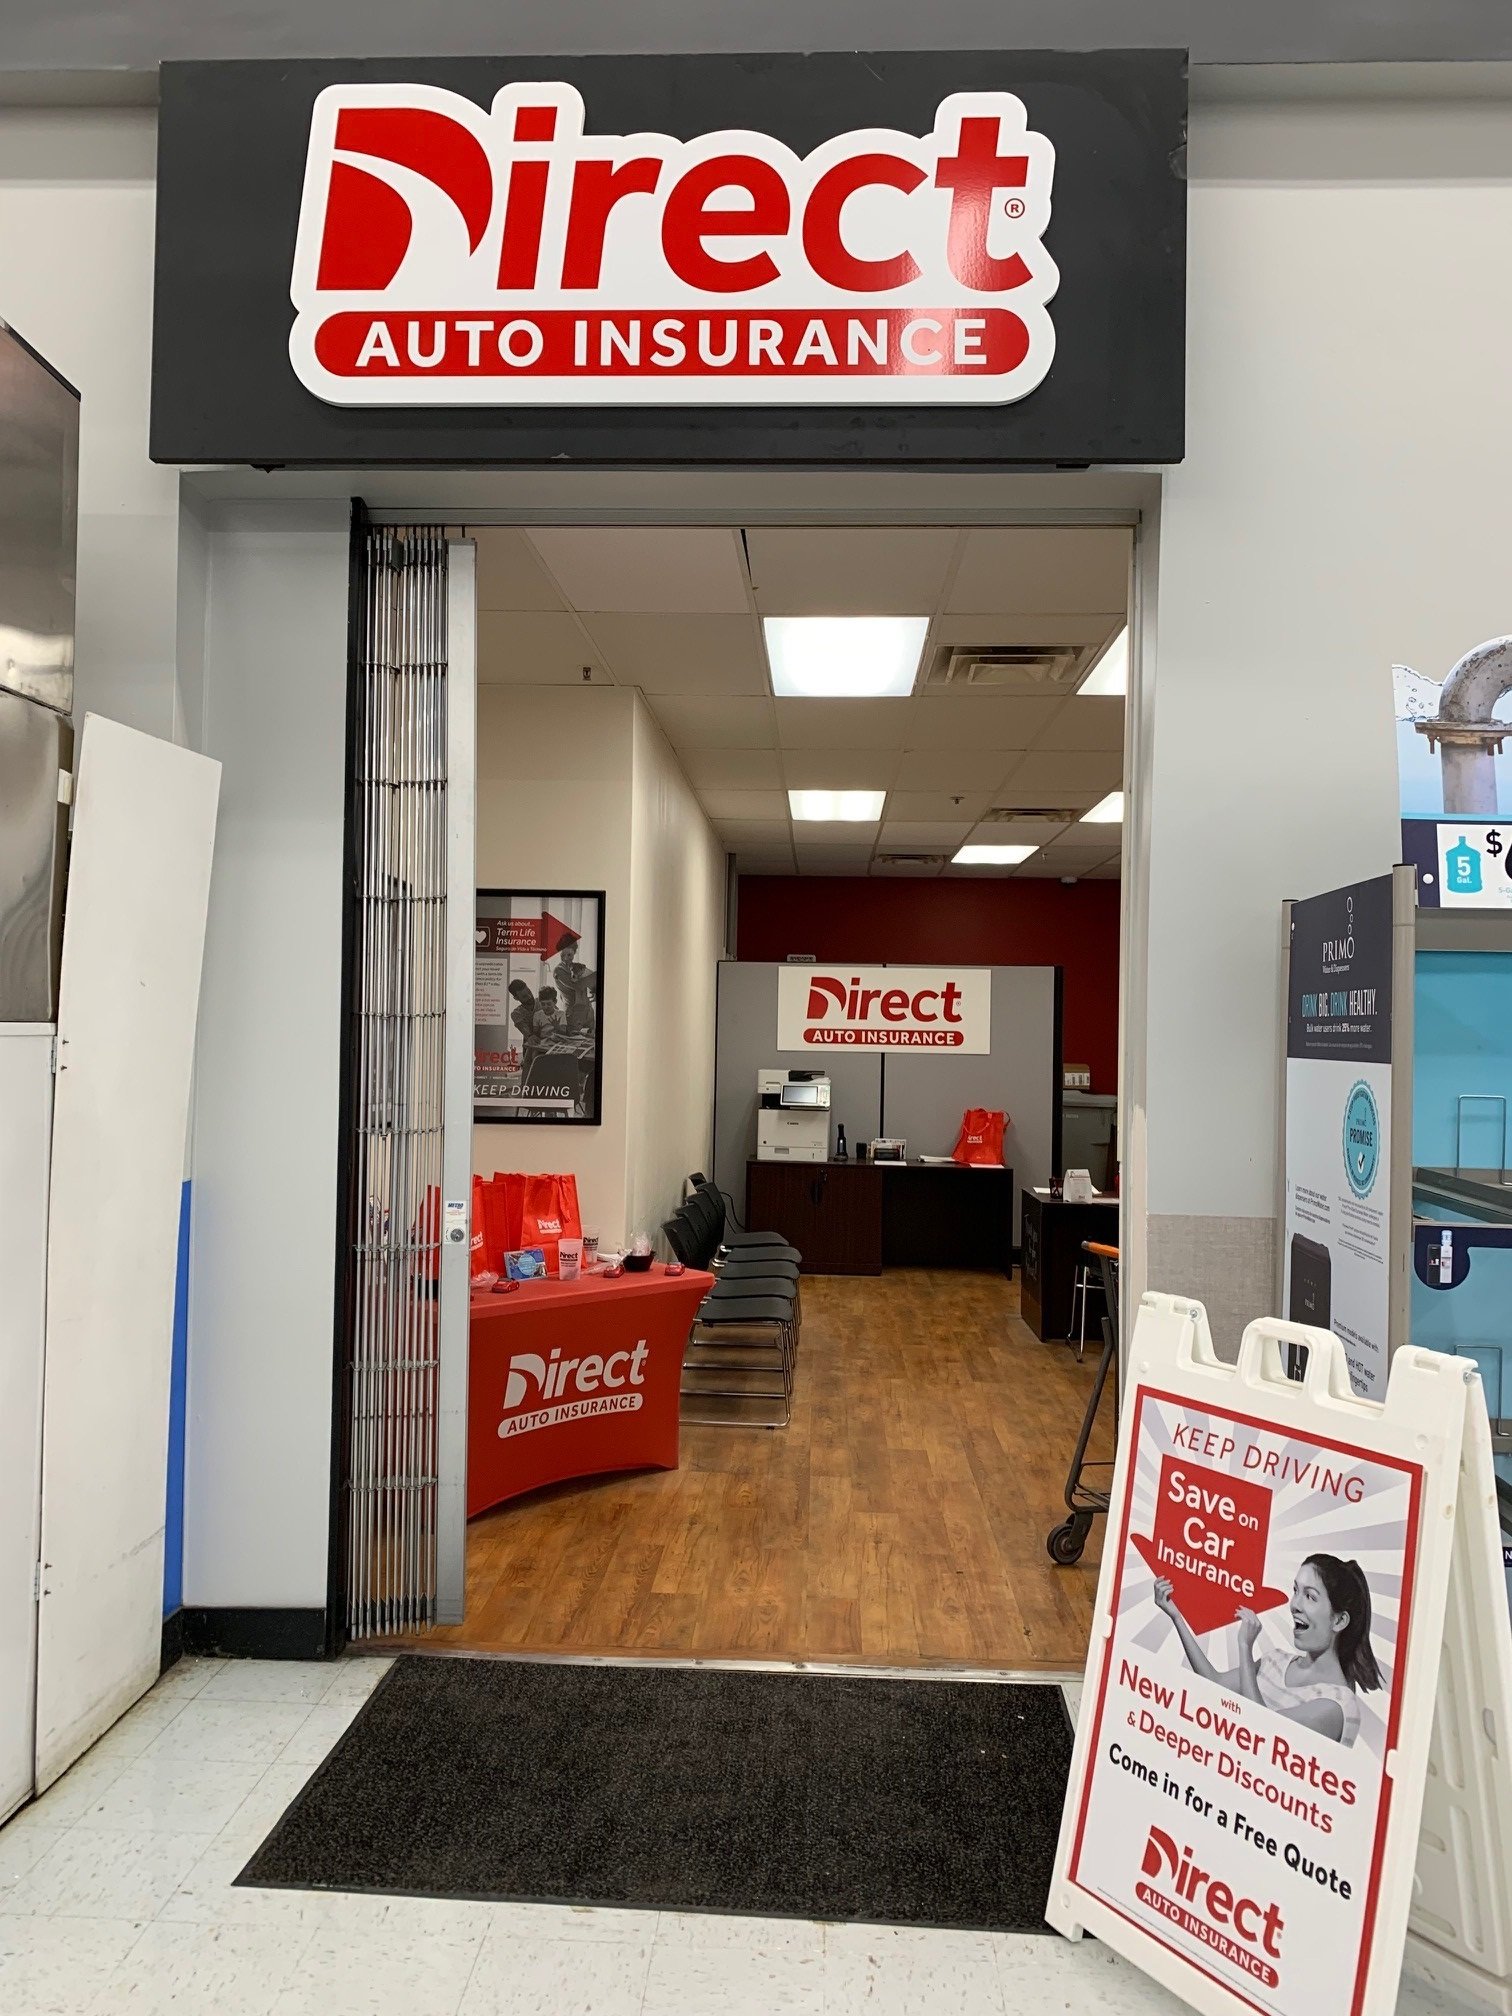 Direct Auto Insurance storefront located at  2675 Decherd Blvd., Winchester